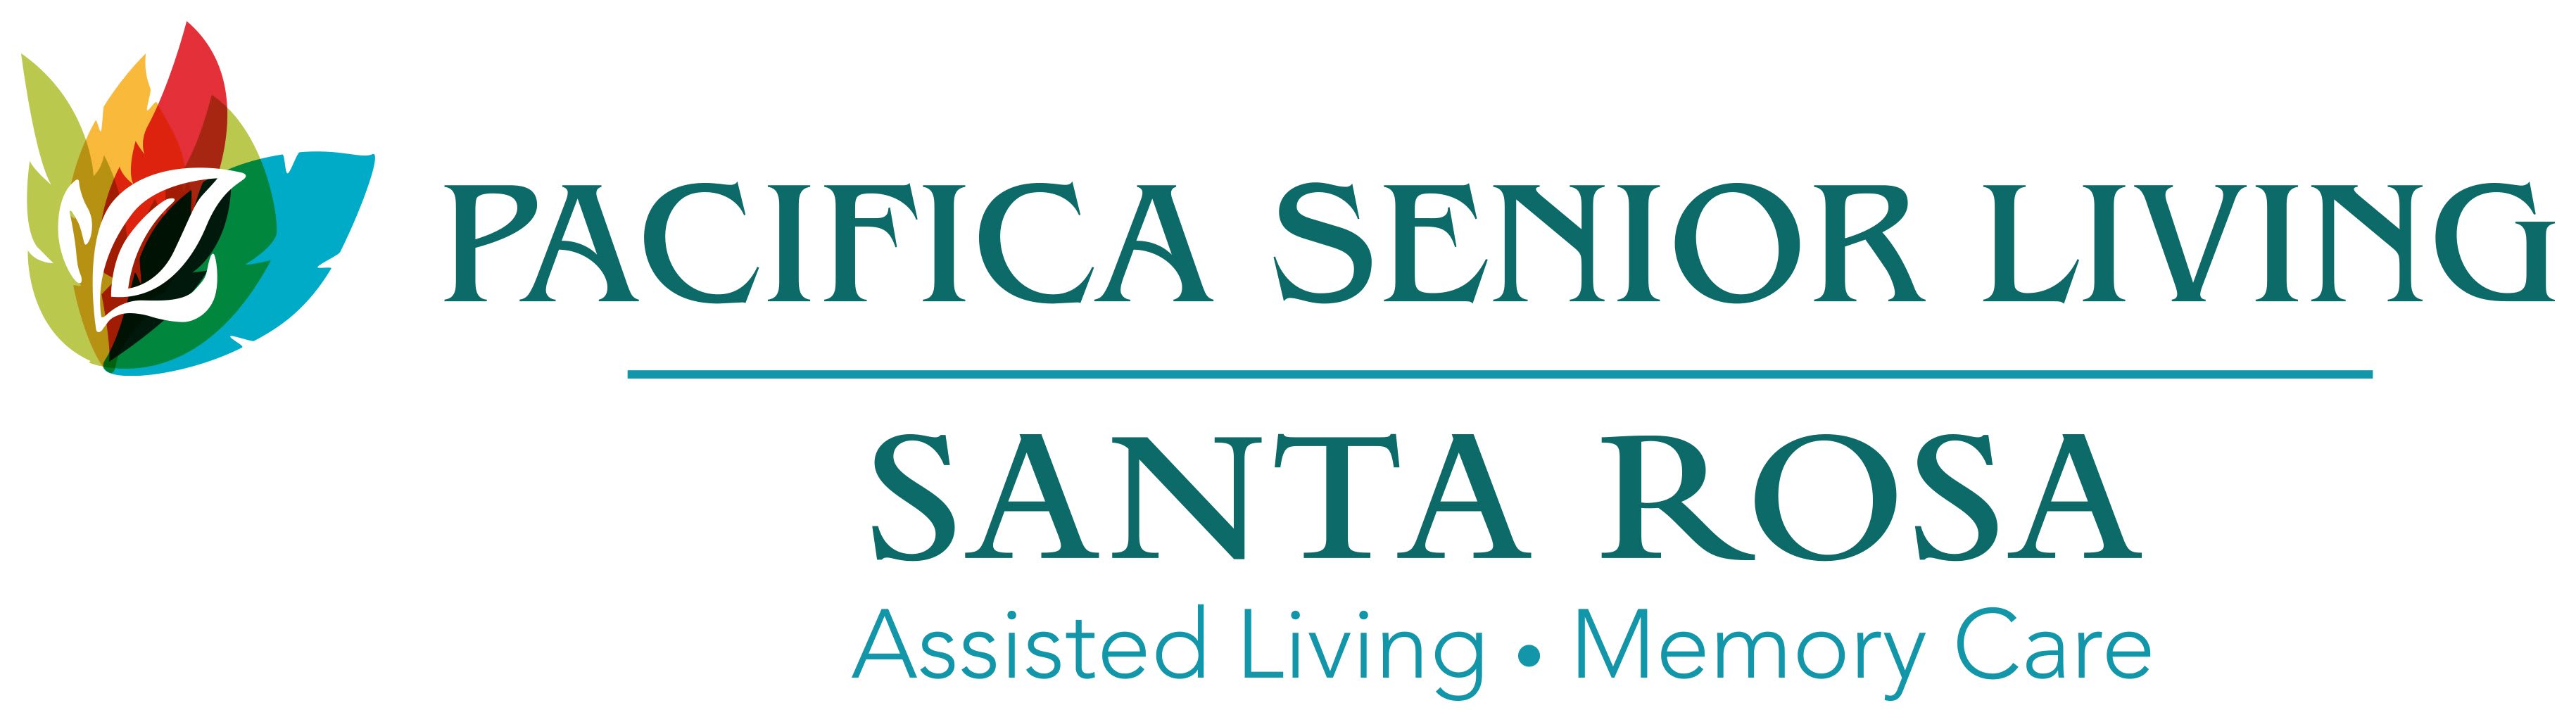 Pacifica Senior Living Santa Rosa (Opening Early 2023) logo